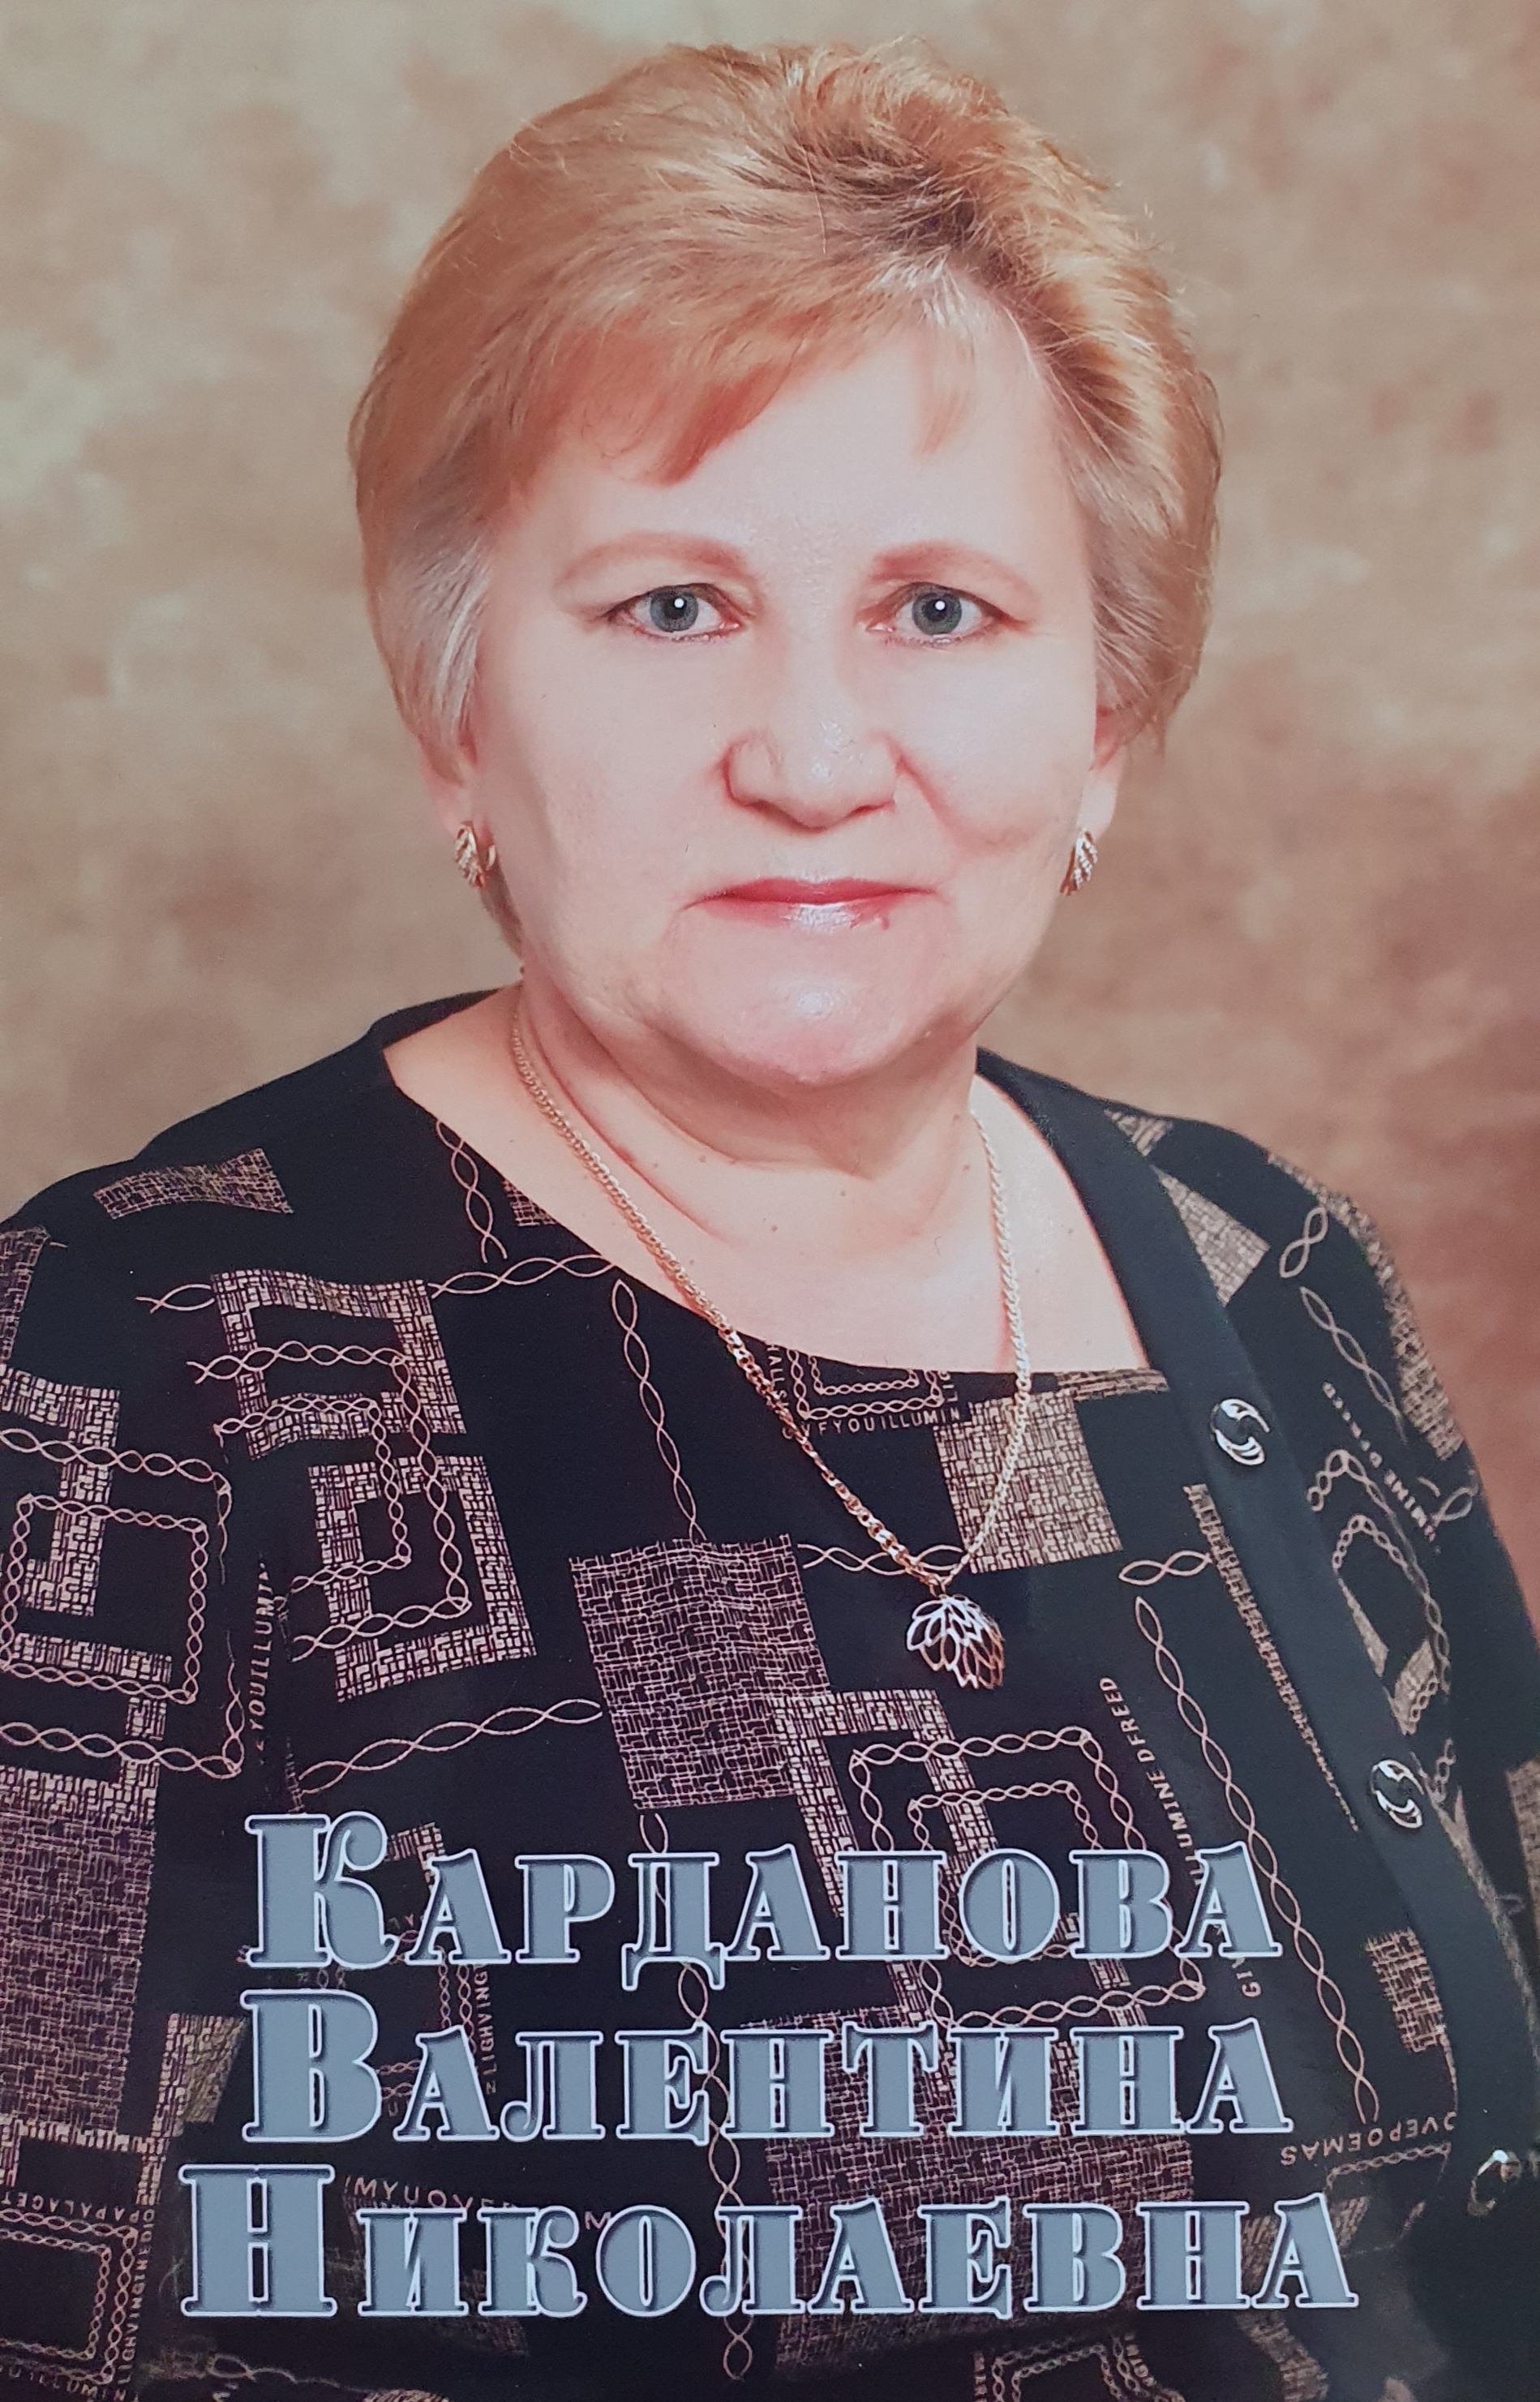 Карданова Валентина Николаевна.